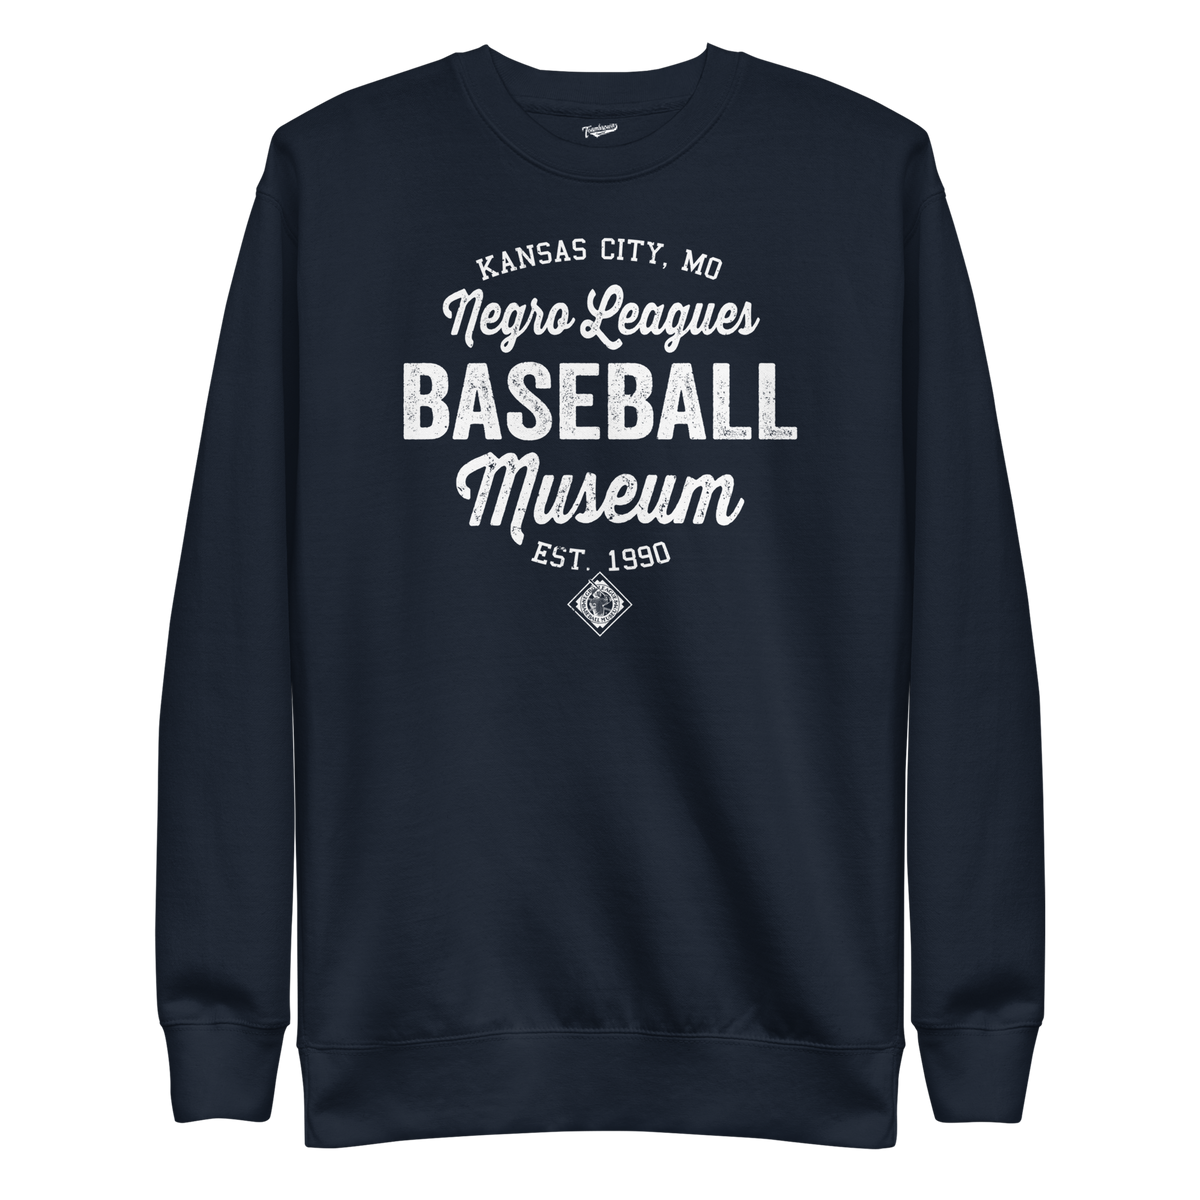 NLBM - Negro Leagues Baseball Museum - Est 1990 - Crewneck Sweatshirt